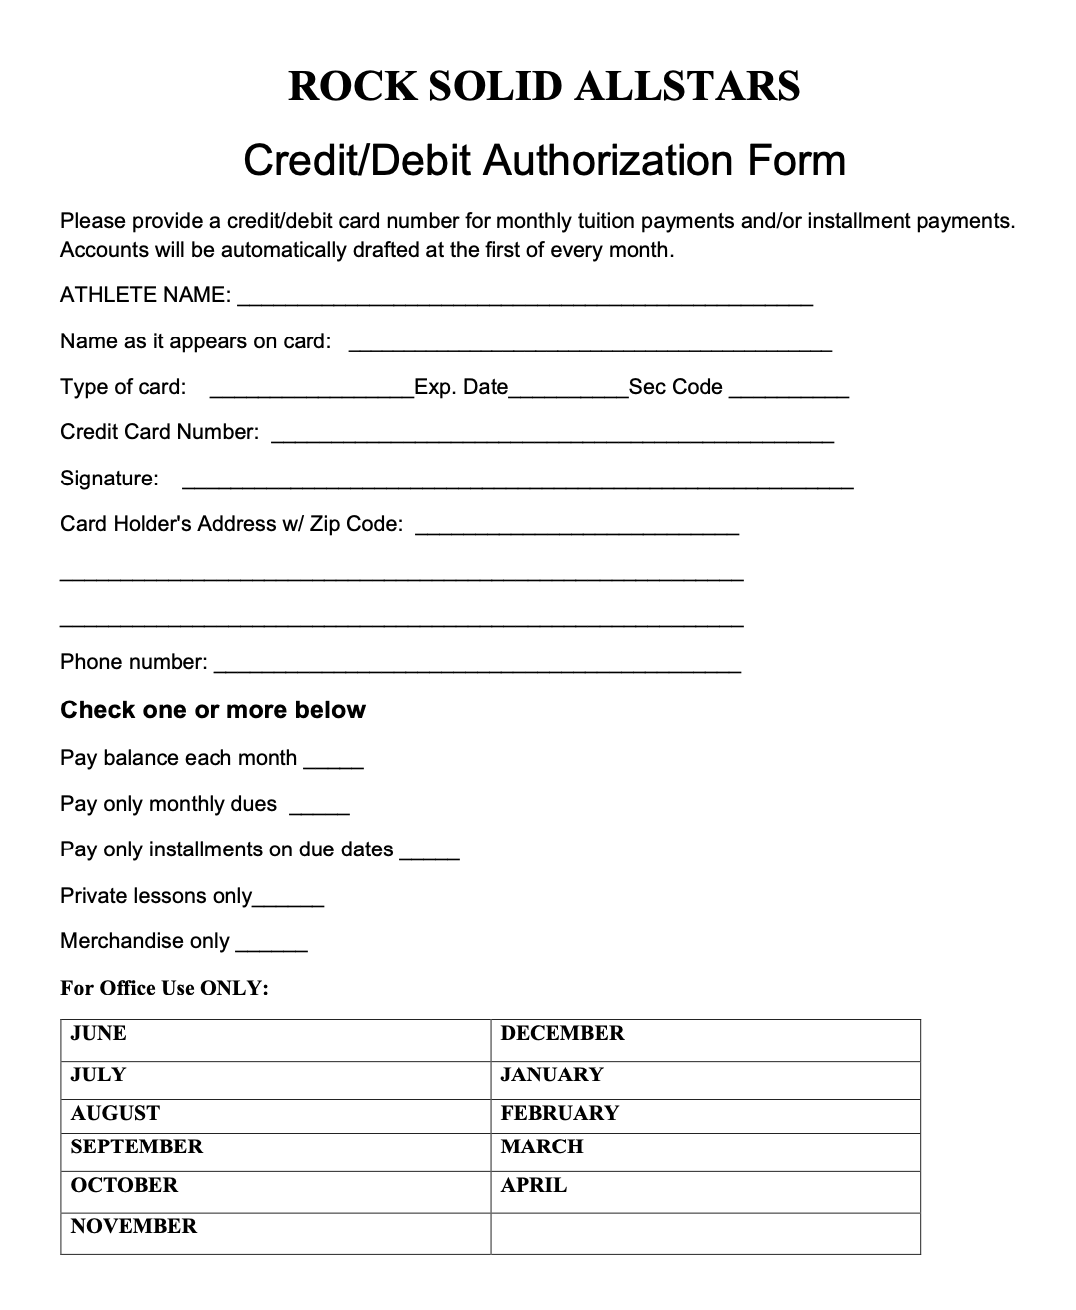 CREDIT CARD AUTHORIZATION